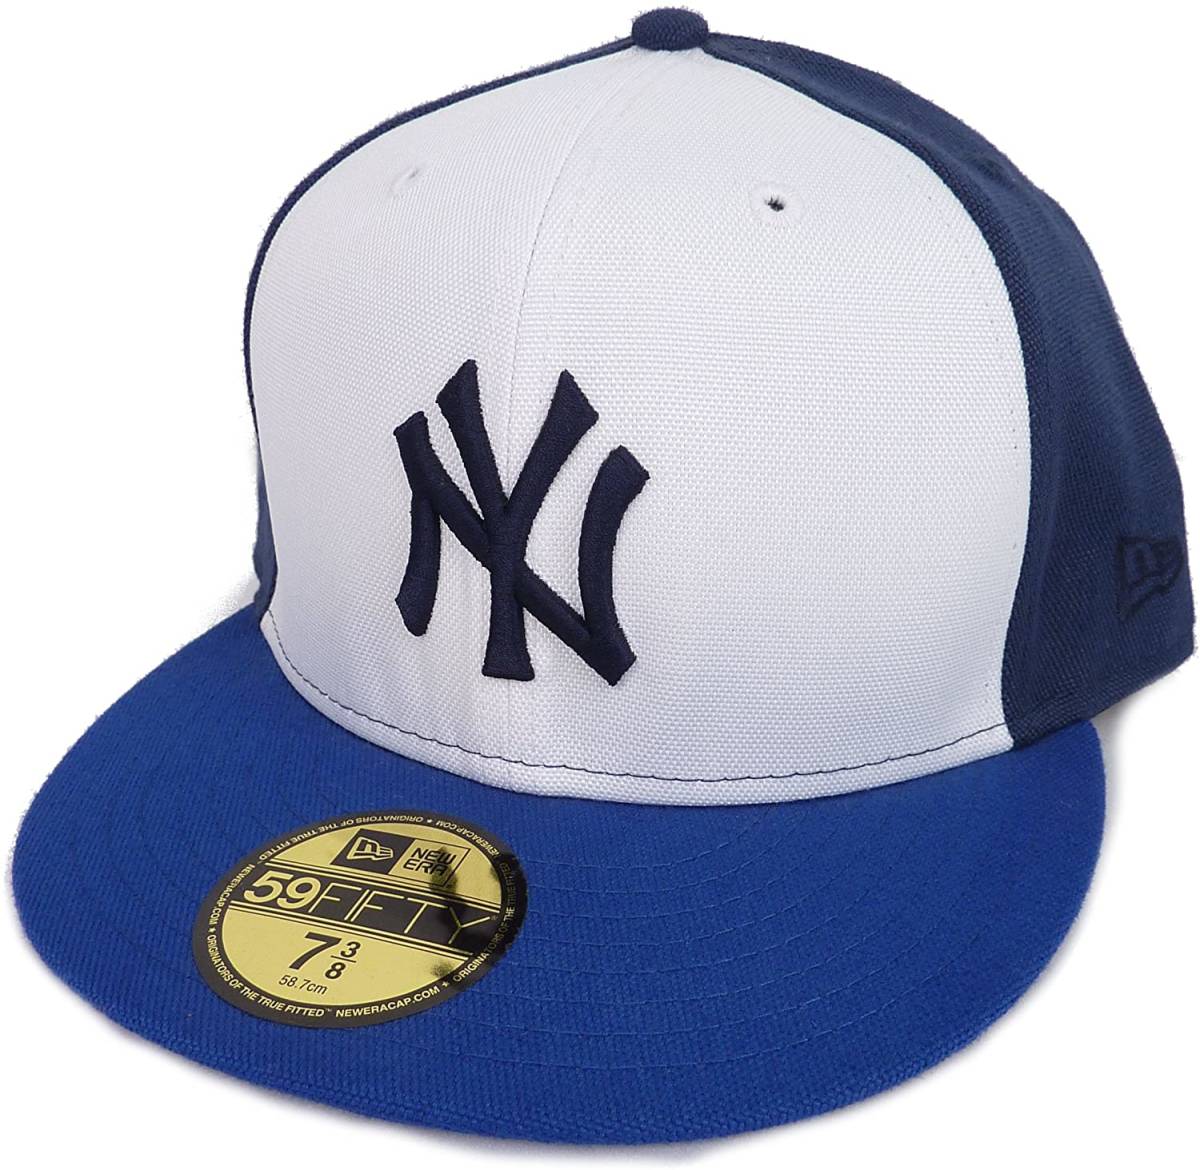 New Era ニューエラ MLB ニューヨーク ヤンキース ベースボールキャップ (ホワイト/ネイビー/ブルー) (7 1/2 59.6cm) [並行輸入品]